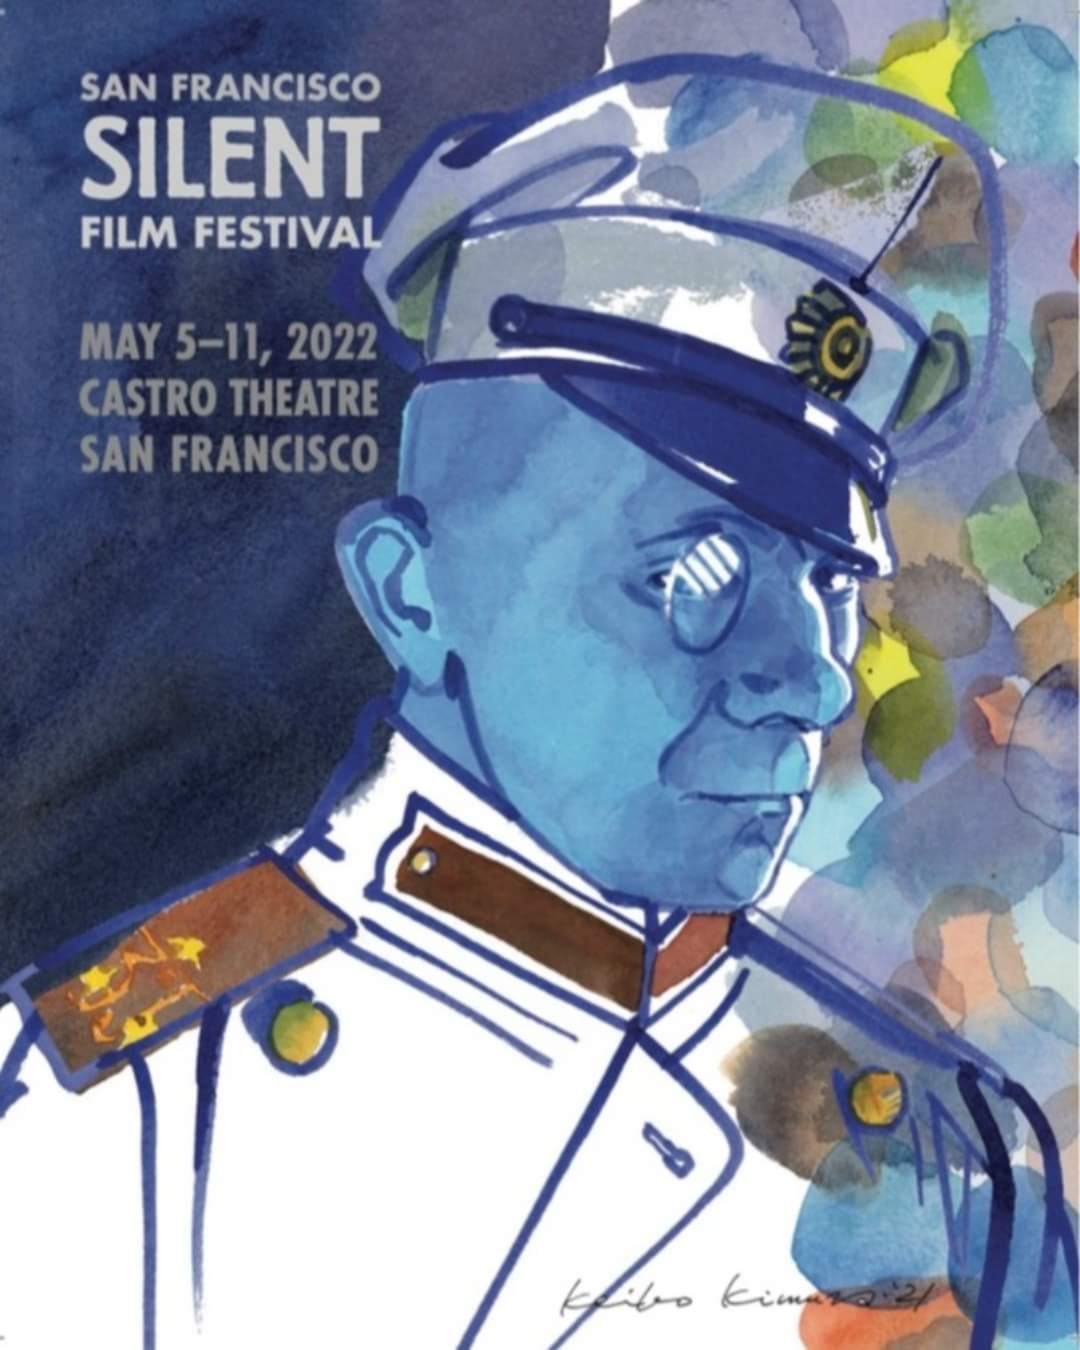 San Francisco Silent Film Festival 2022 REEL TO REEL INSTITUTE